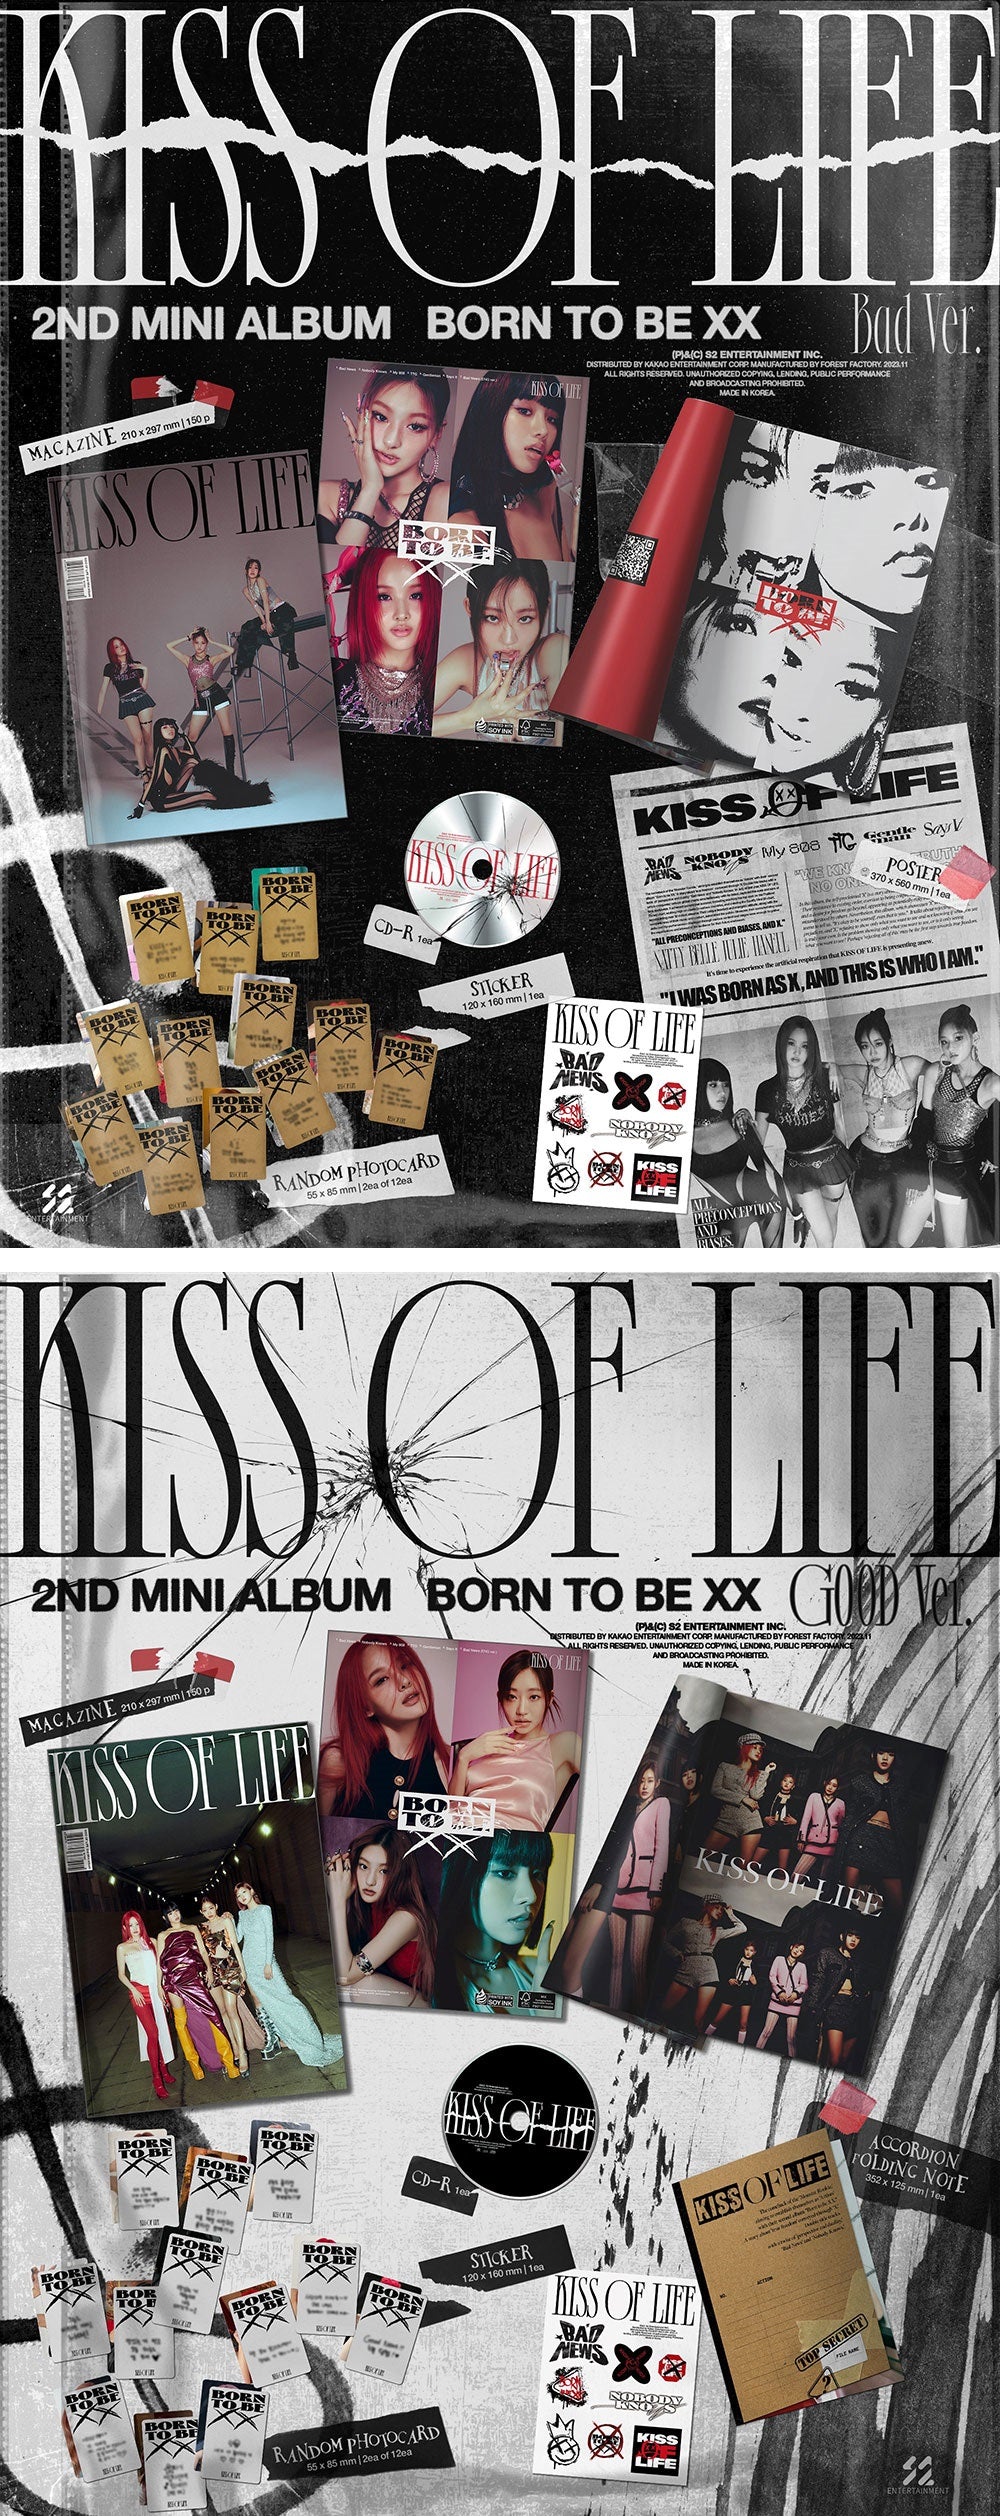 KISS OF LIFE - Born to be XX (2nd Mini Album)